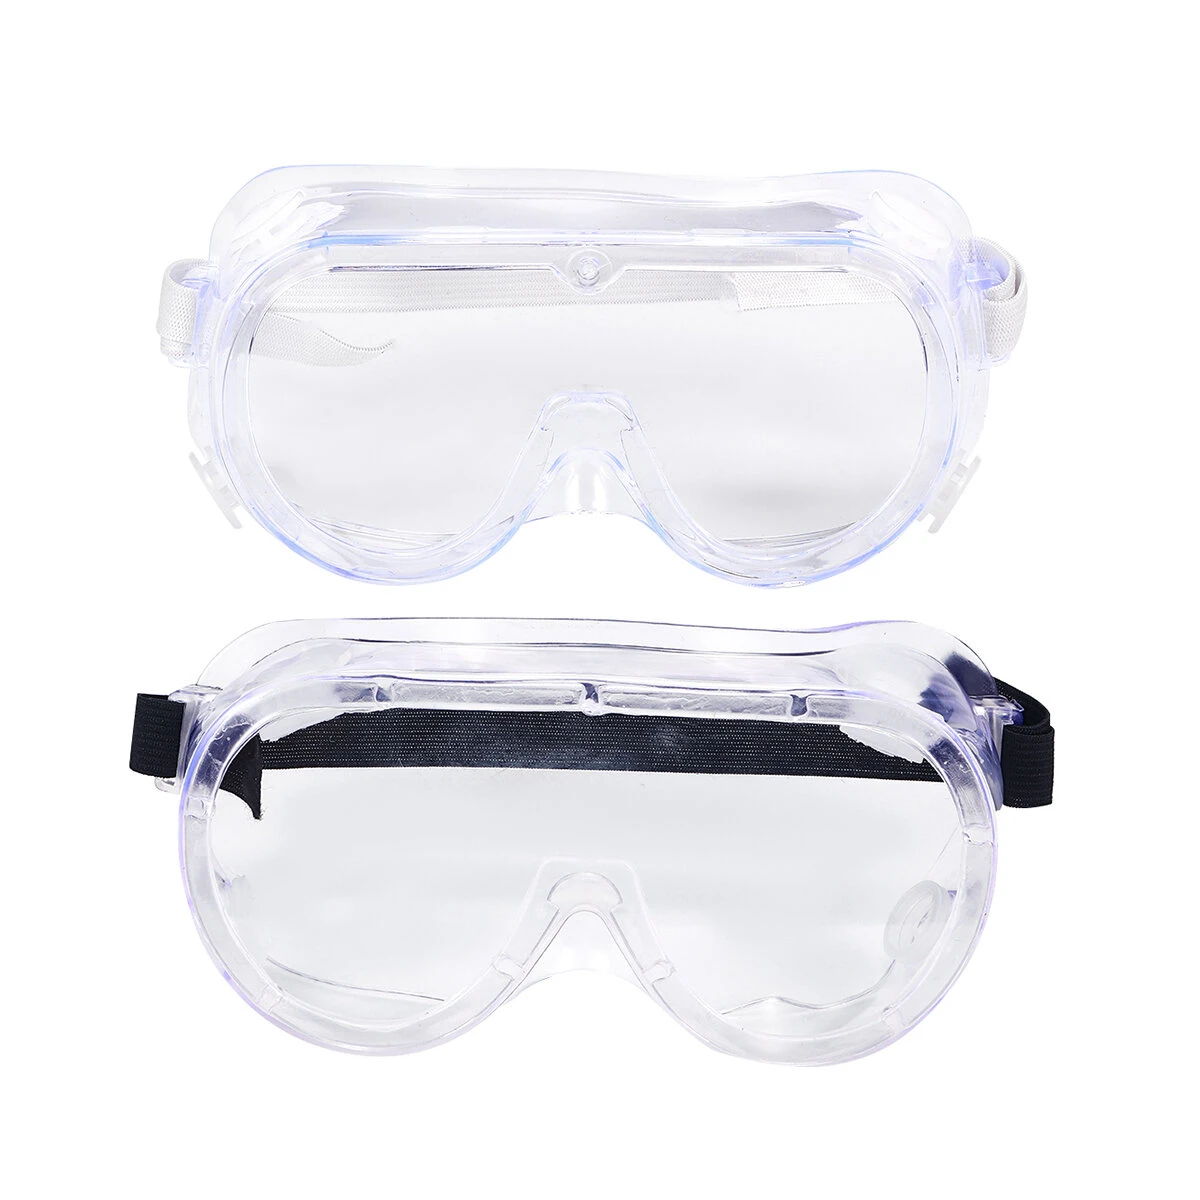 Safety goggles anti fog dust splash-proof glasses lens lab work eye protection